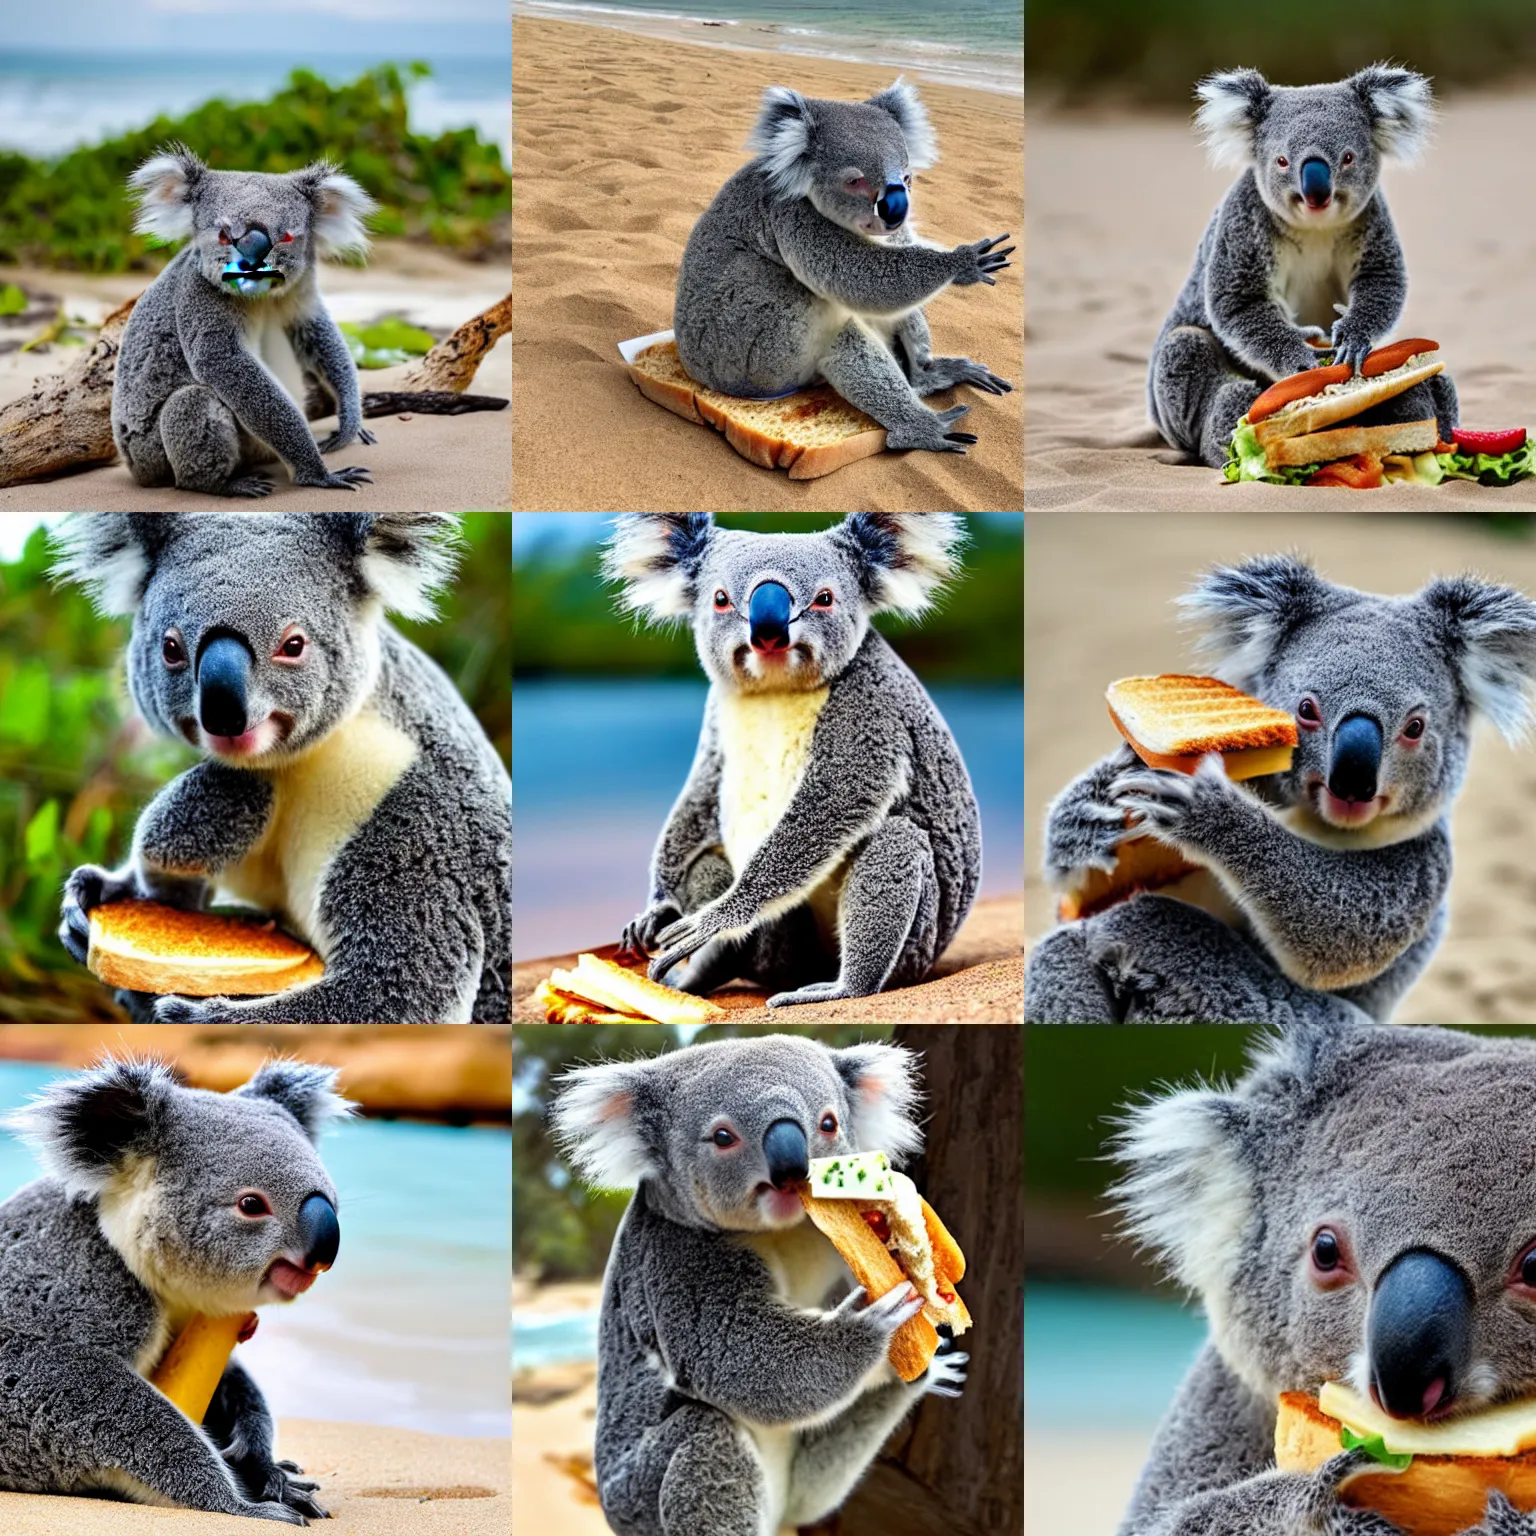 Prompt: a koala on a beach eating a sandwich